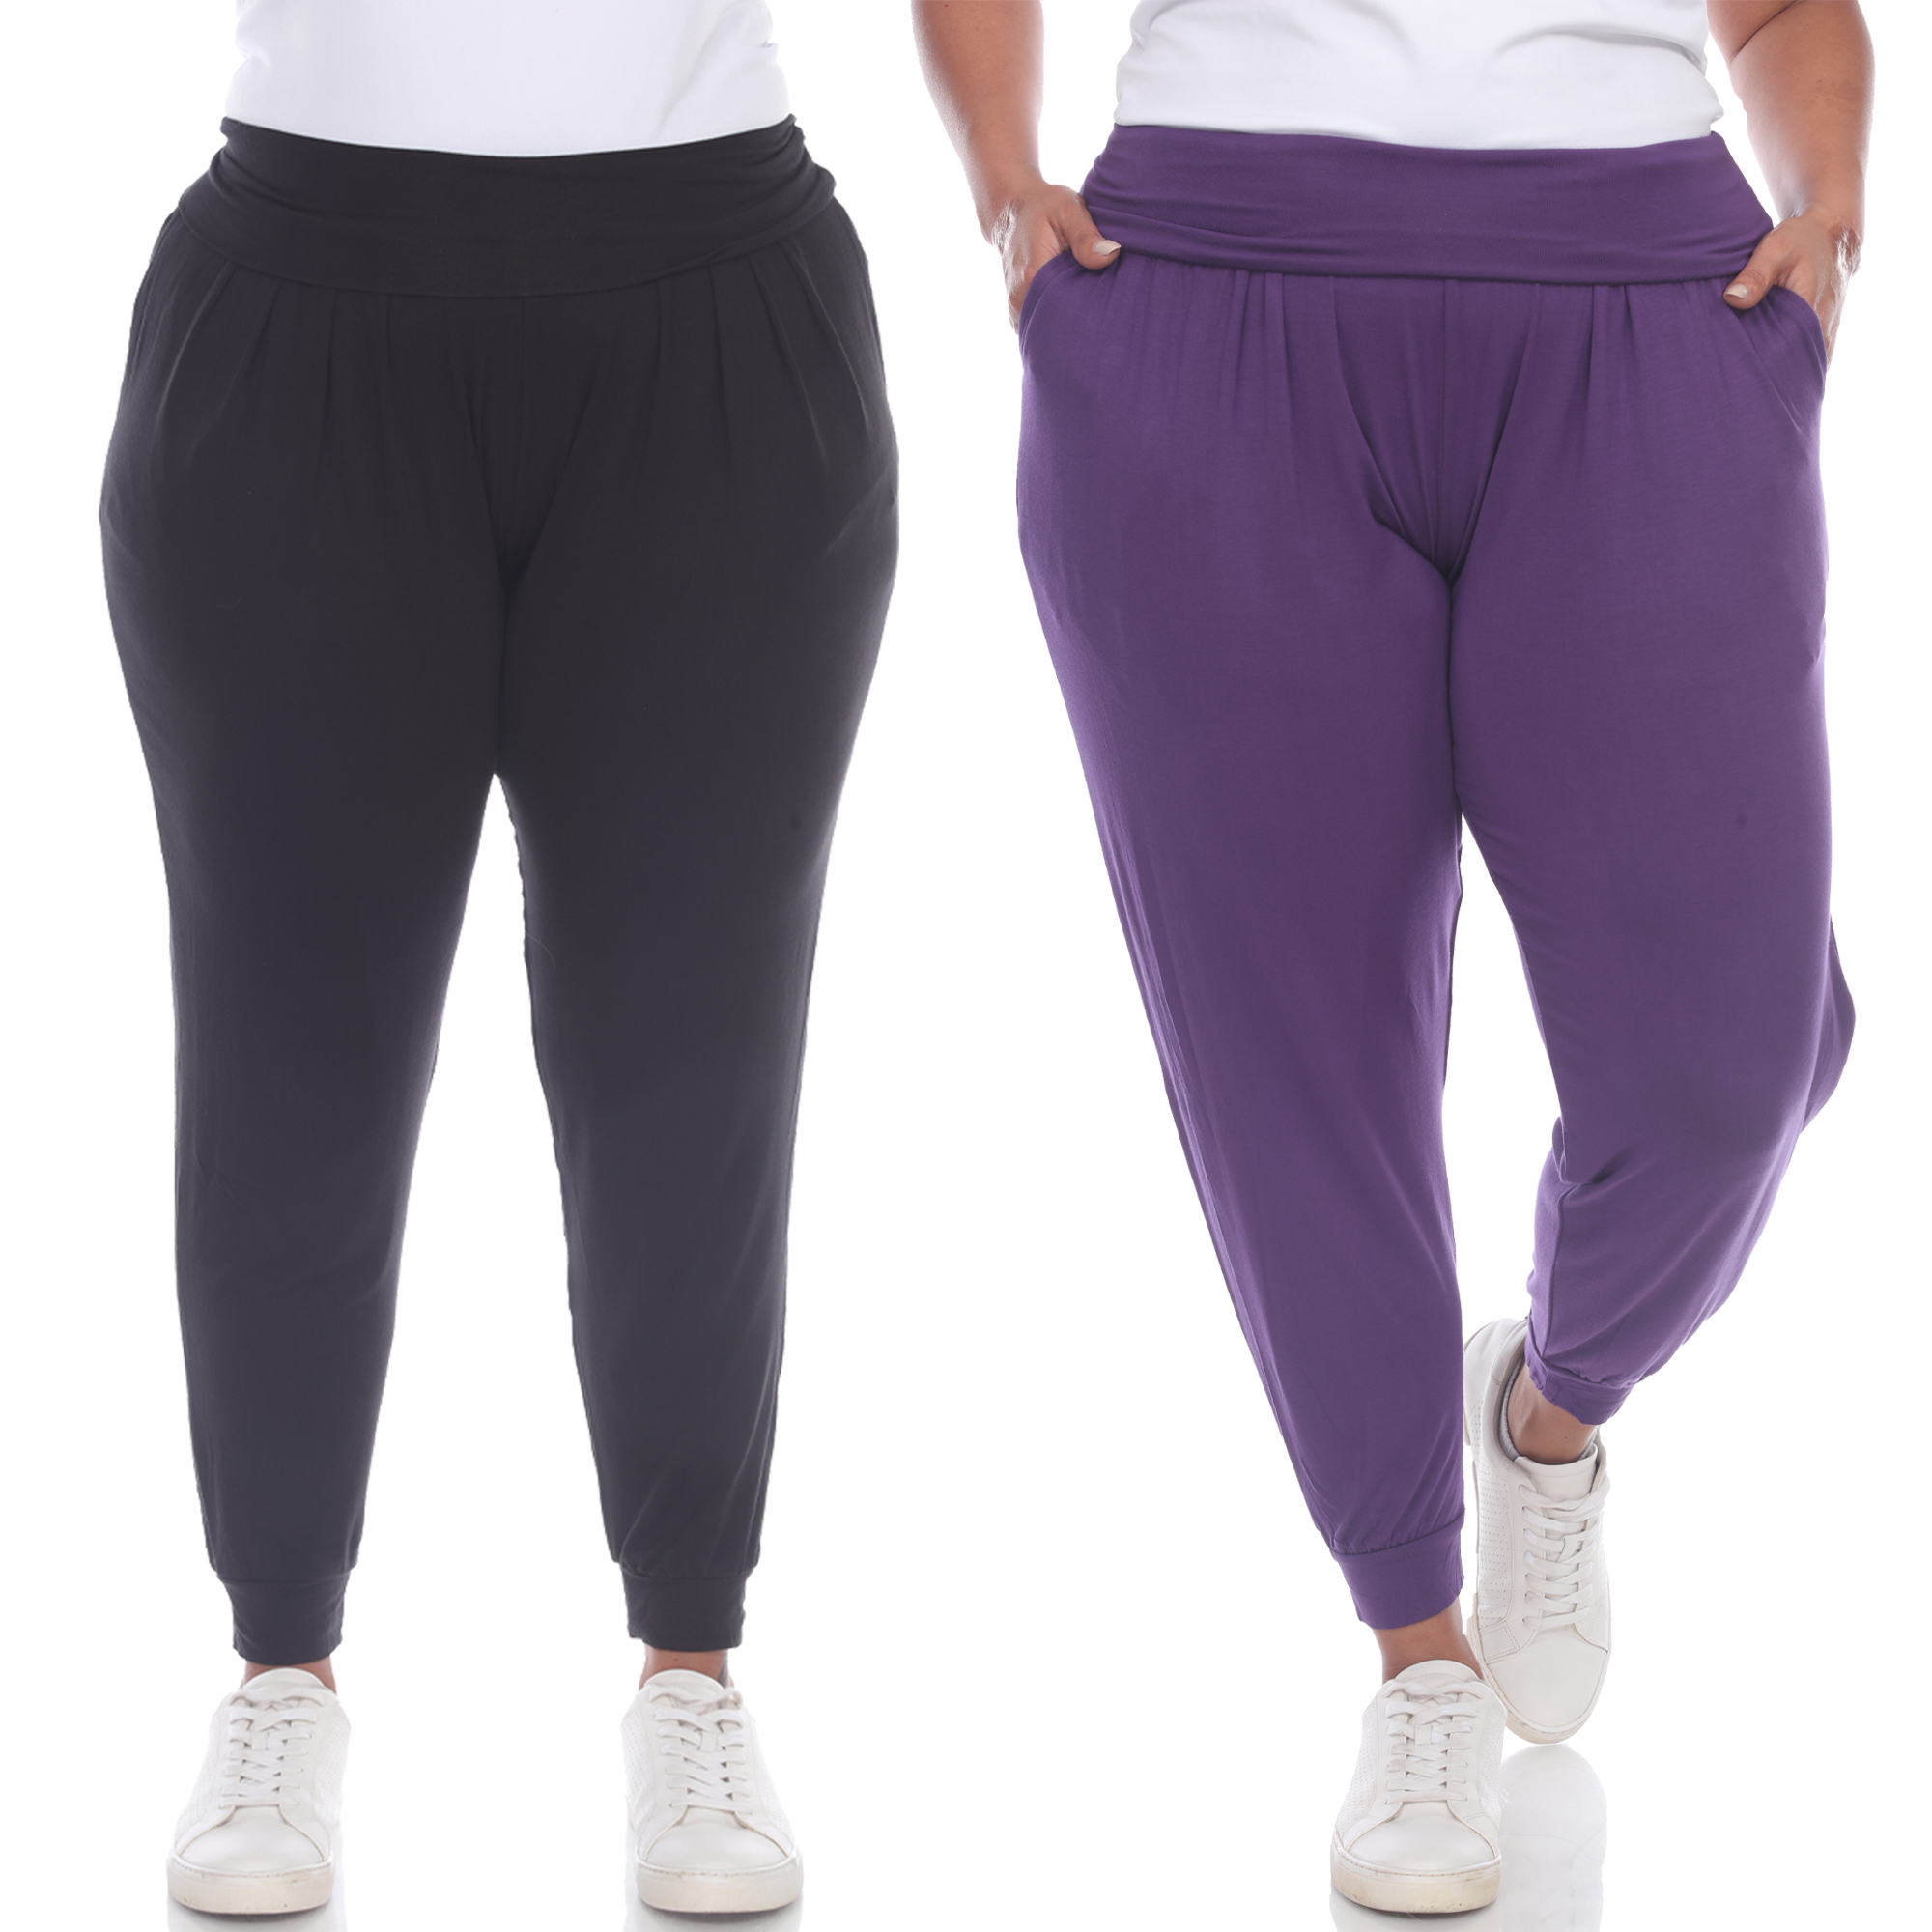 White Mark Women's 2-Pack High Waist Harem Pants - Black, Purple, 2X